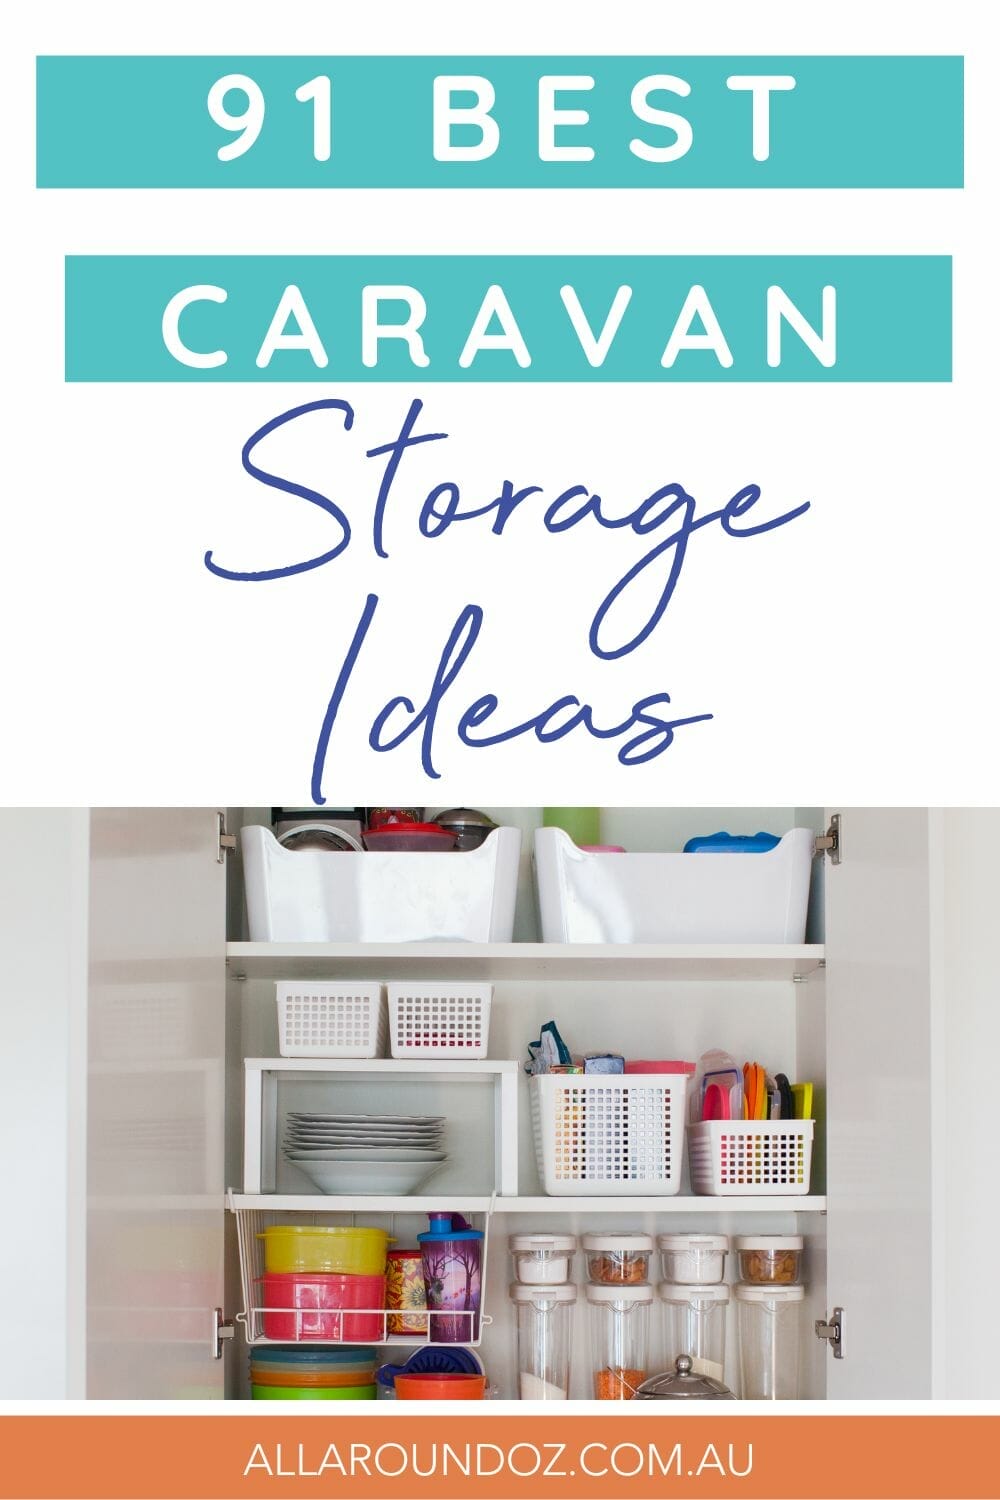 91+ Best Caravan Storage Ideas, Hacks & Tips You’ll Love | All Around Oz